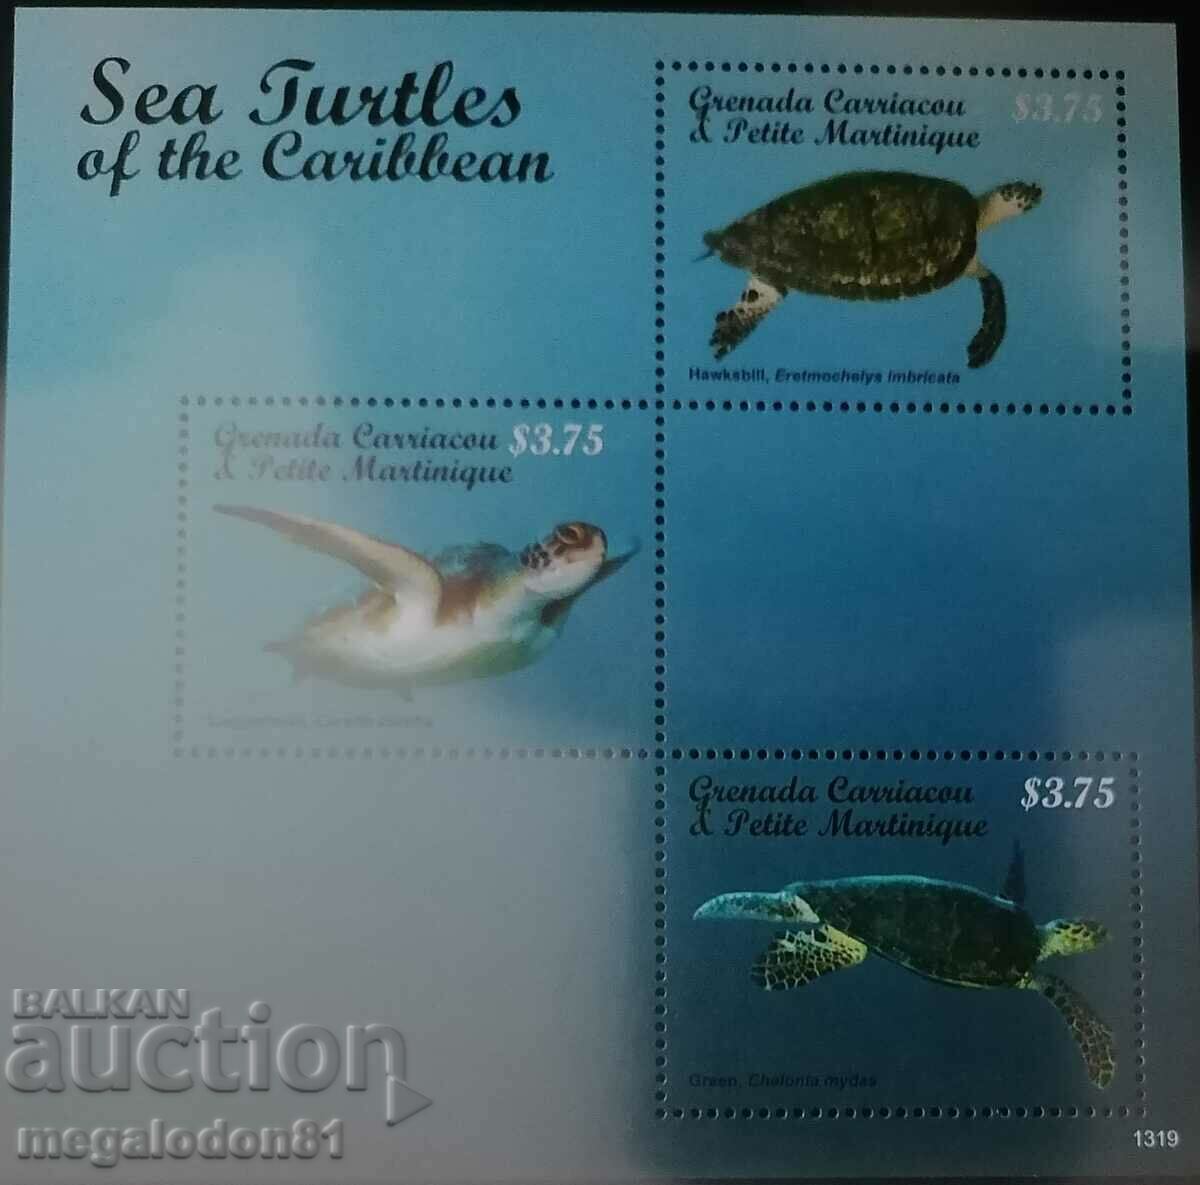 Grenada Curaçao & Petite Martinique - sea turtles